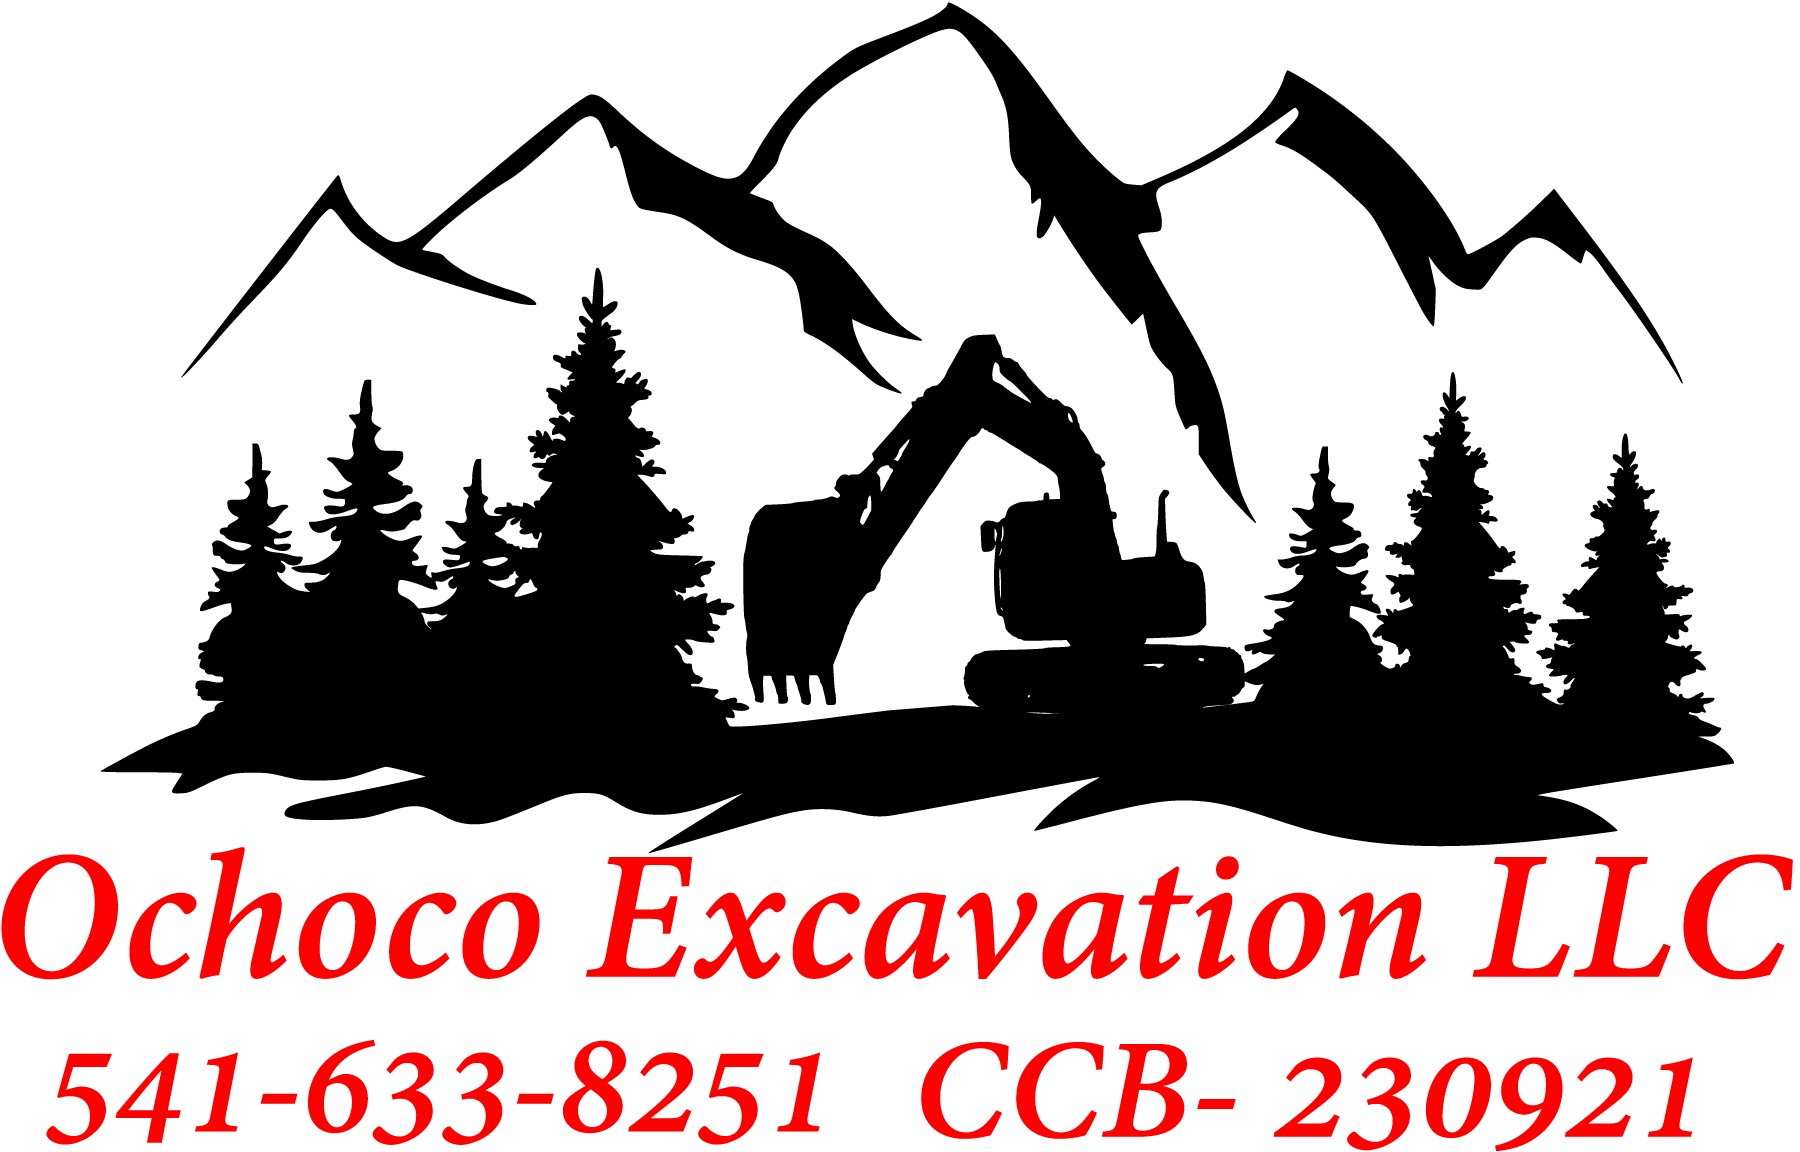 Ochoco Excavation